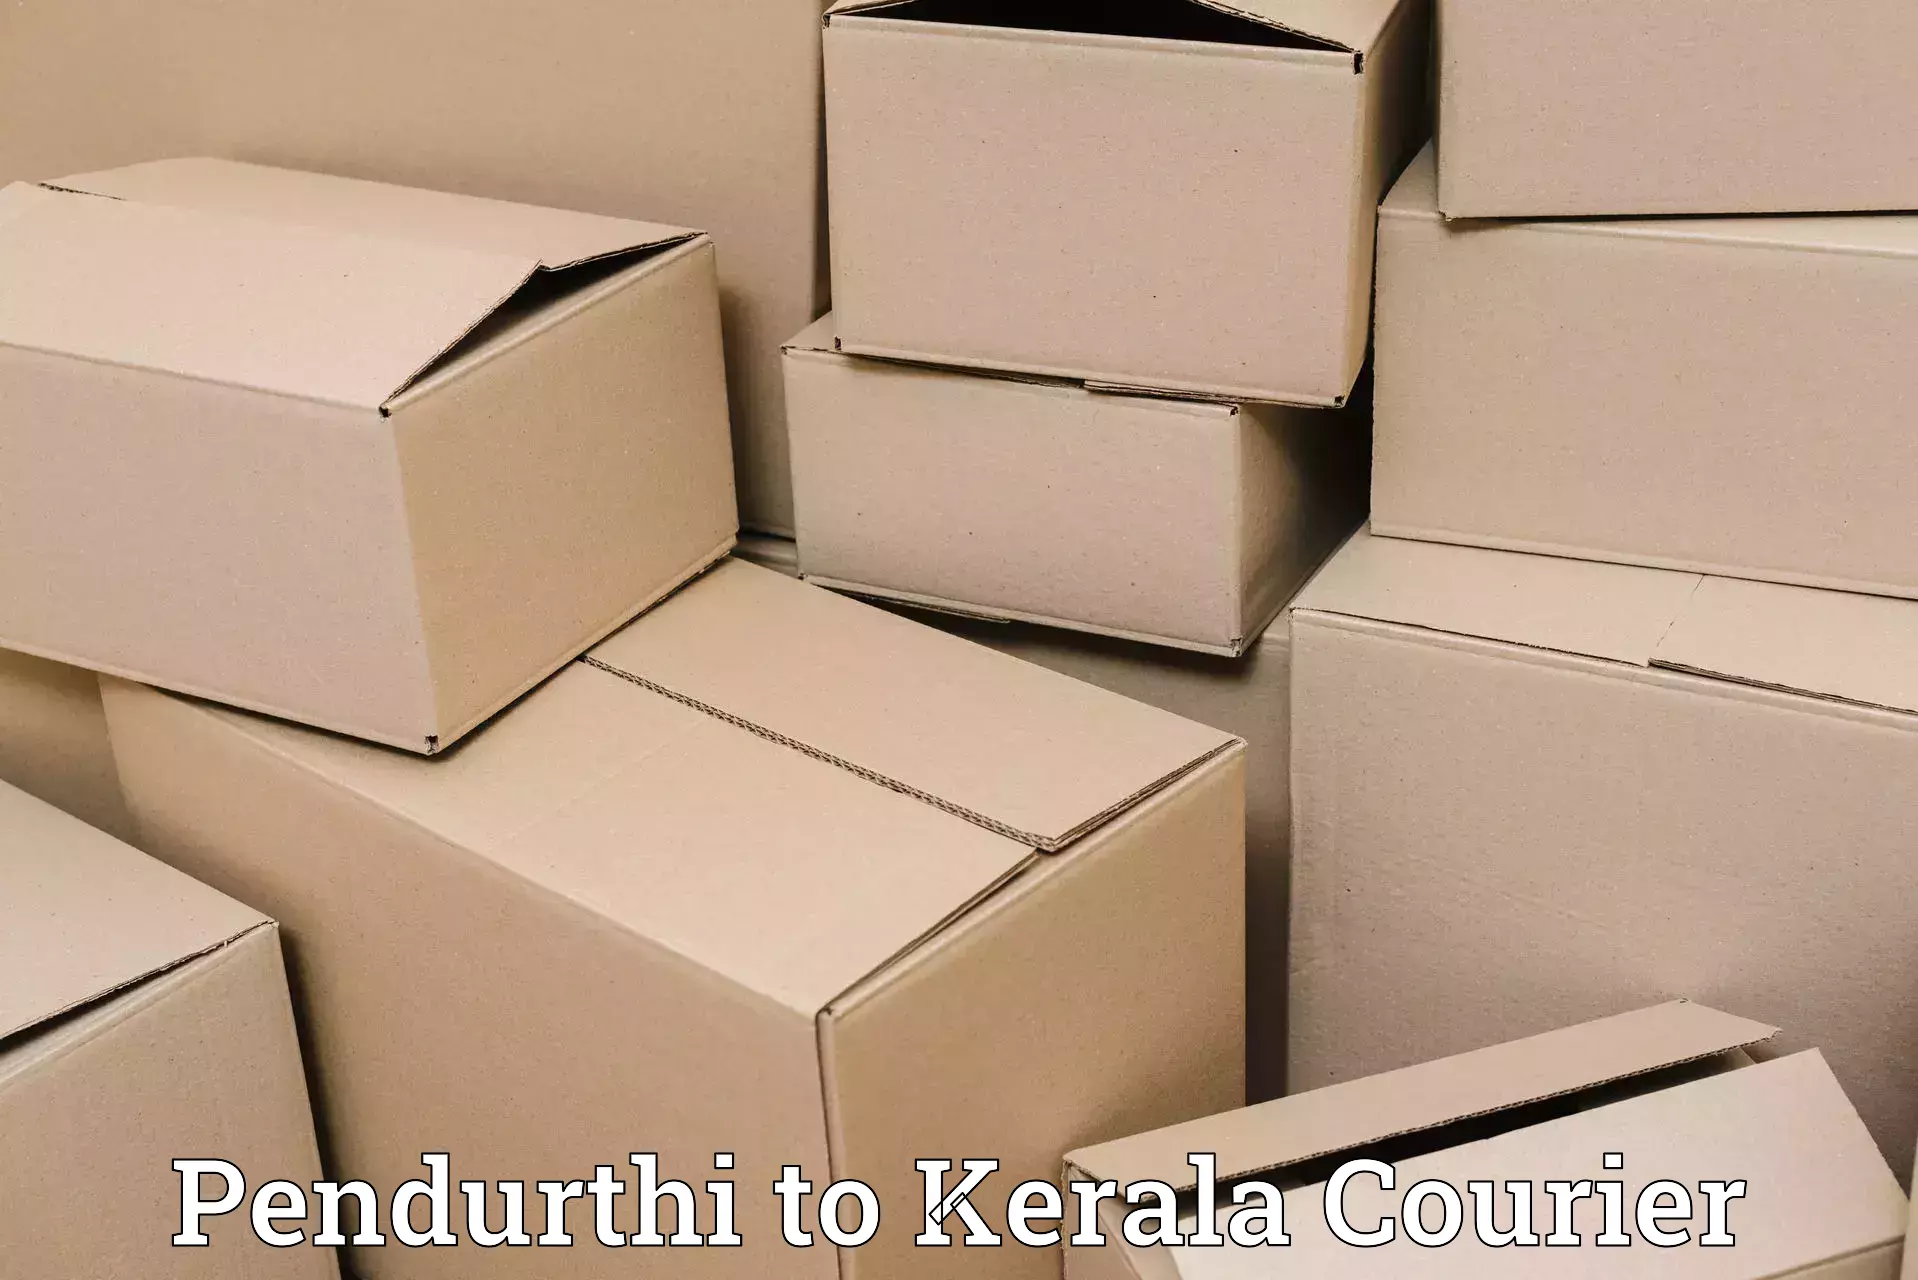 Efficient order fulfillment Pendurthi to Kerala